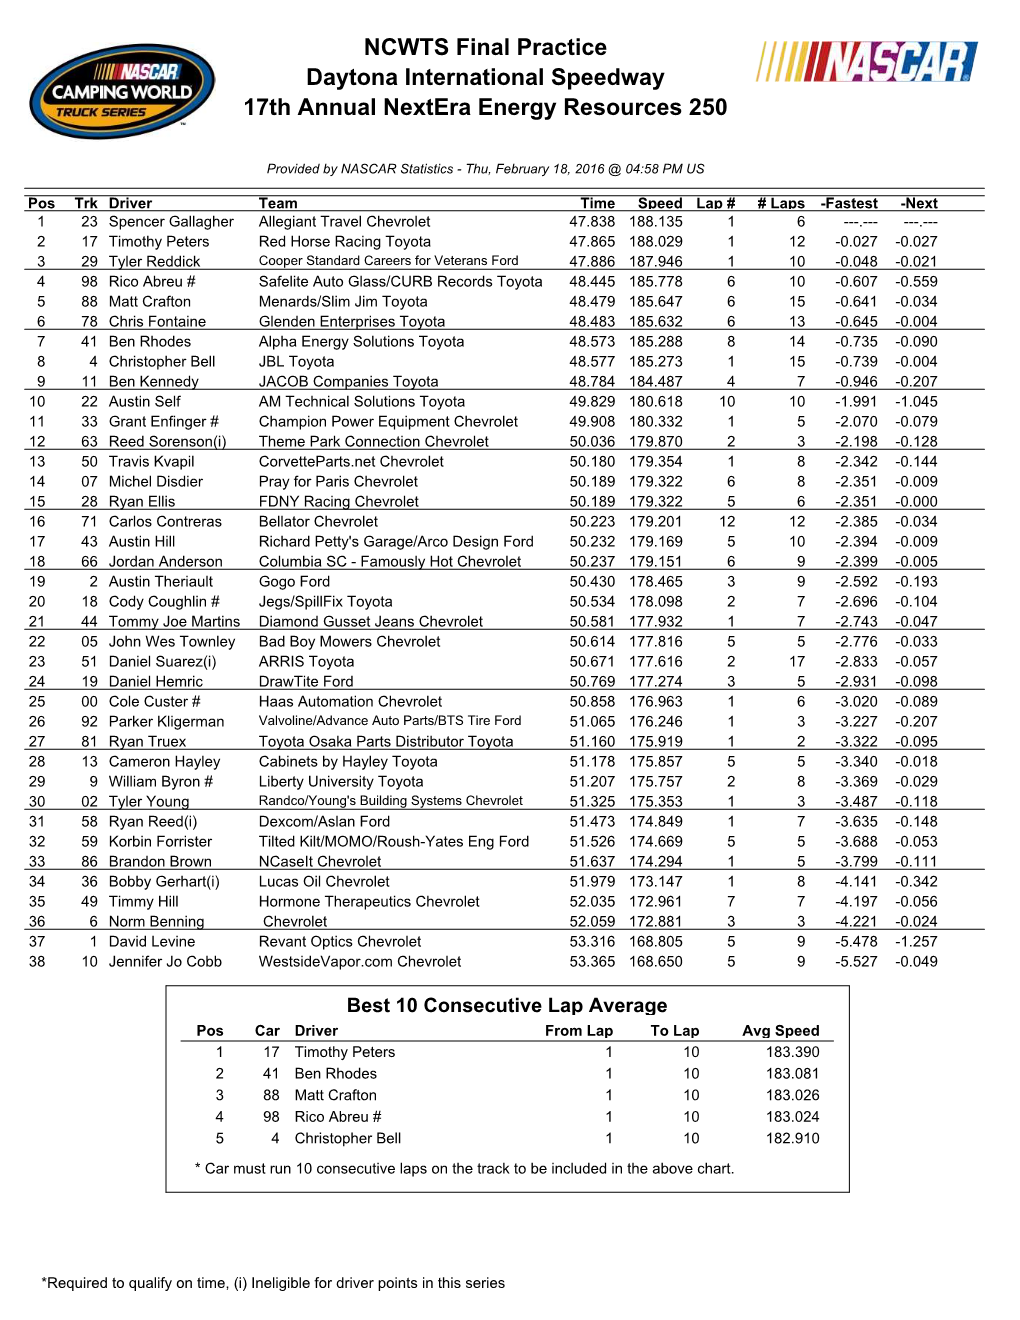 NCWTS Final Practice Daytona International Speedway 17Th Annual Nextera Energy Resources 250